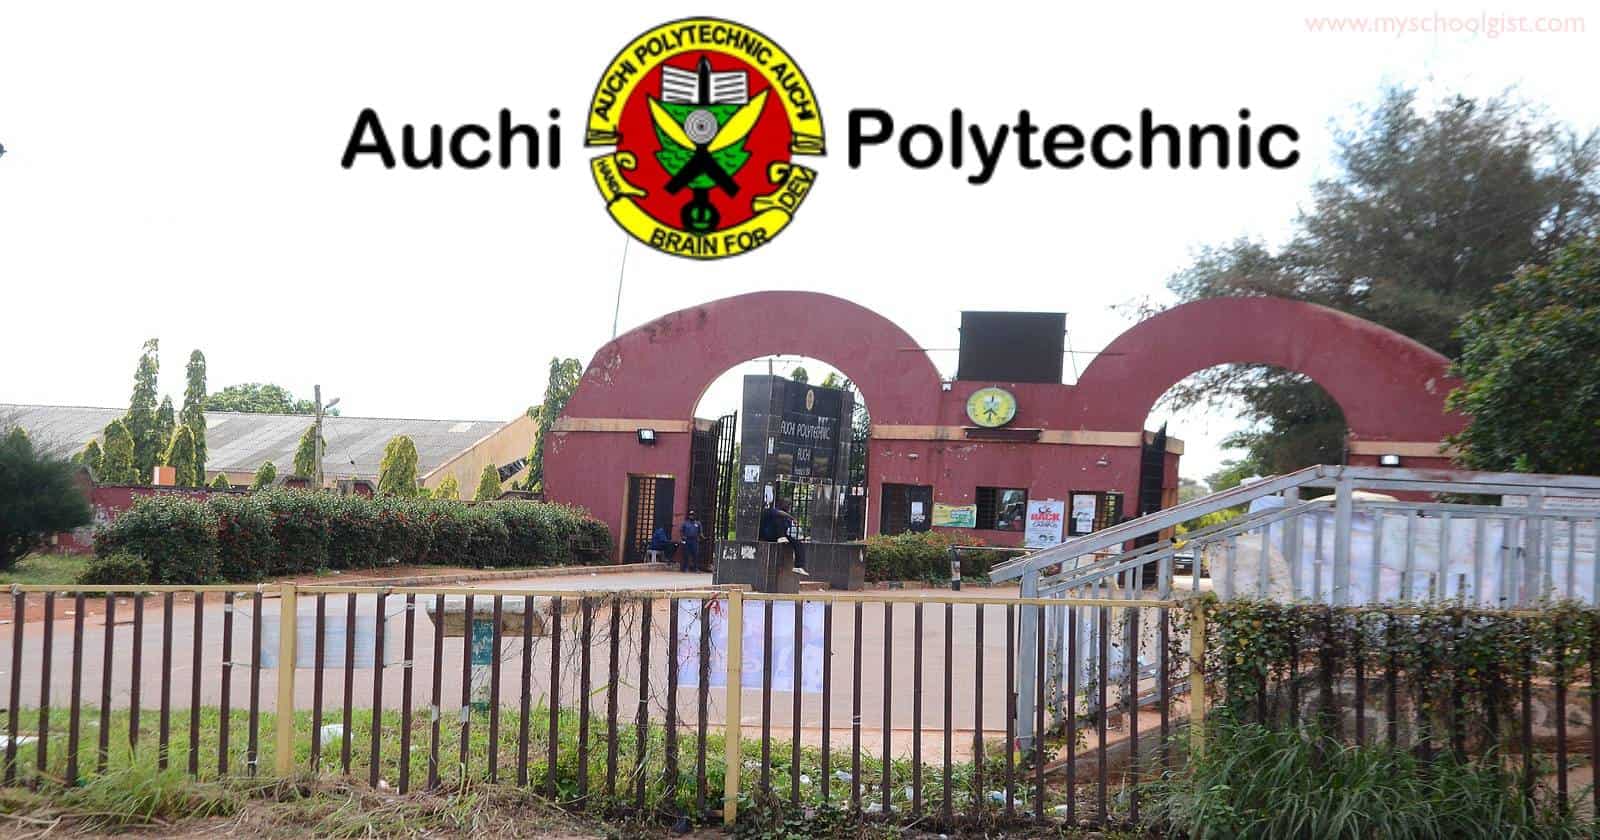 Auchi Polytechnic HND Admission Screening Test